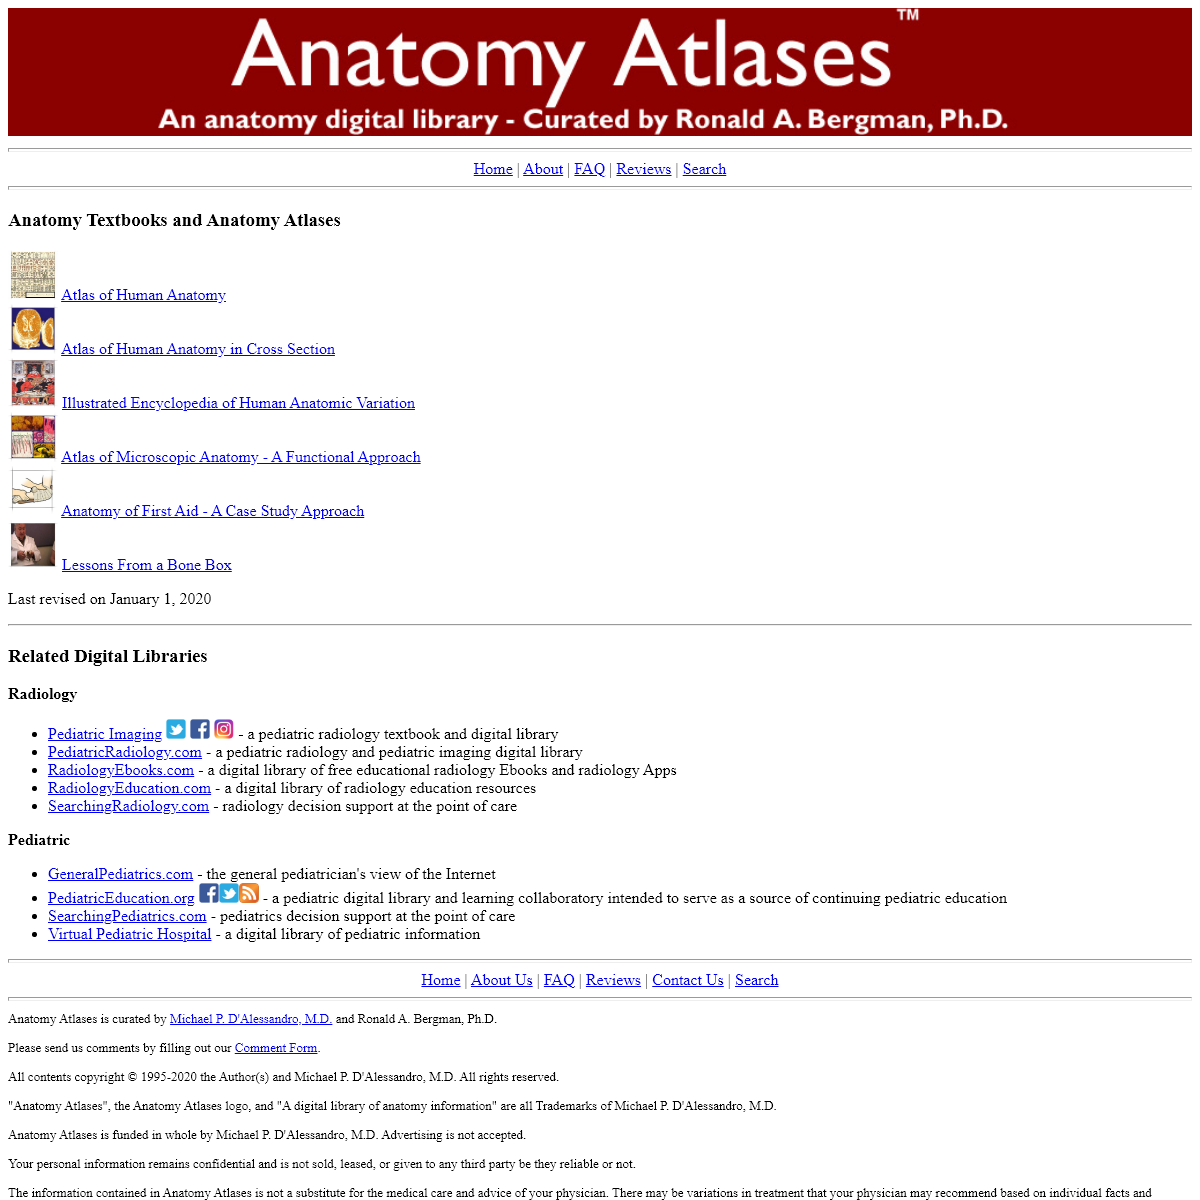 A complete backup of anatomyatlases.org